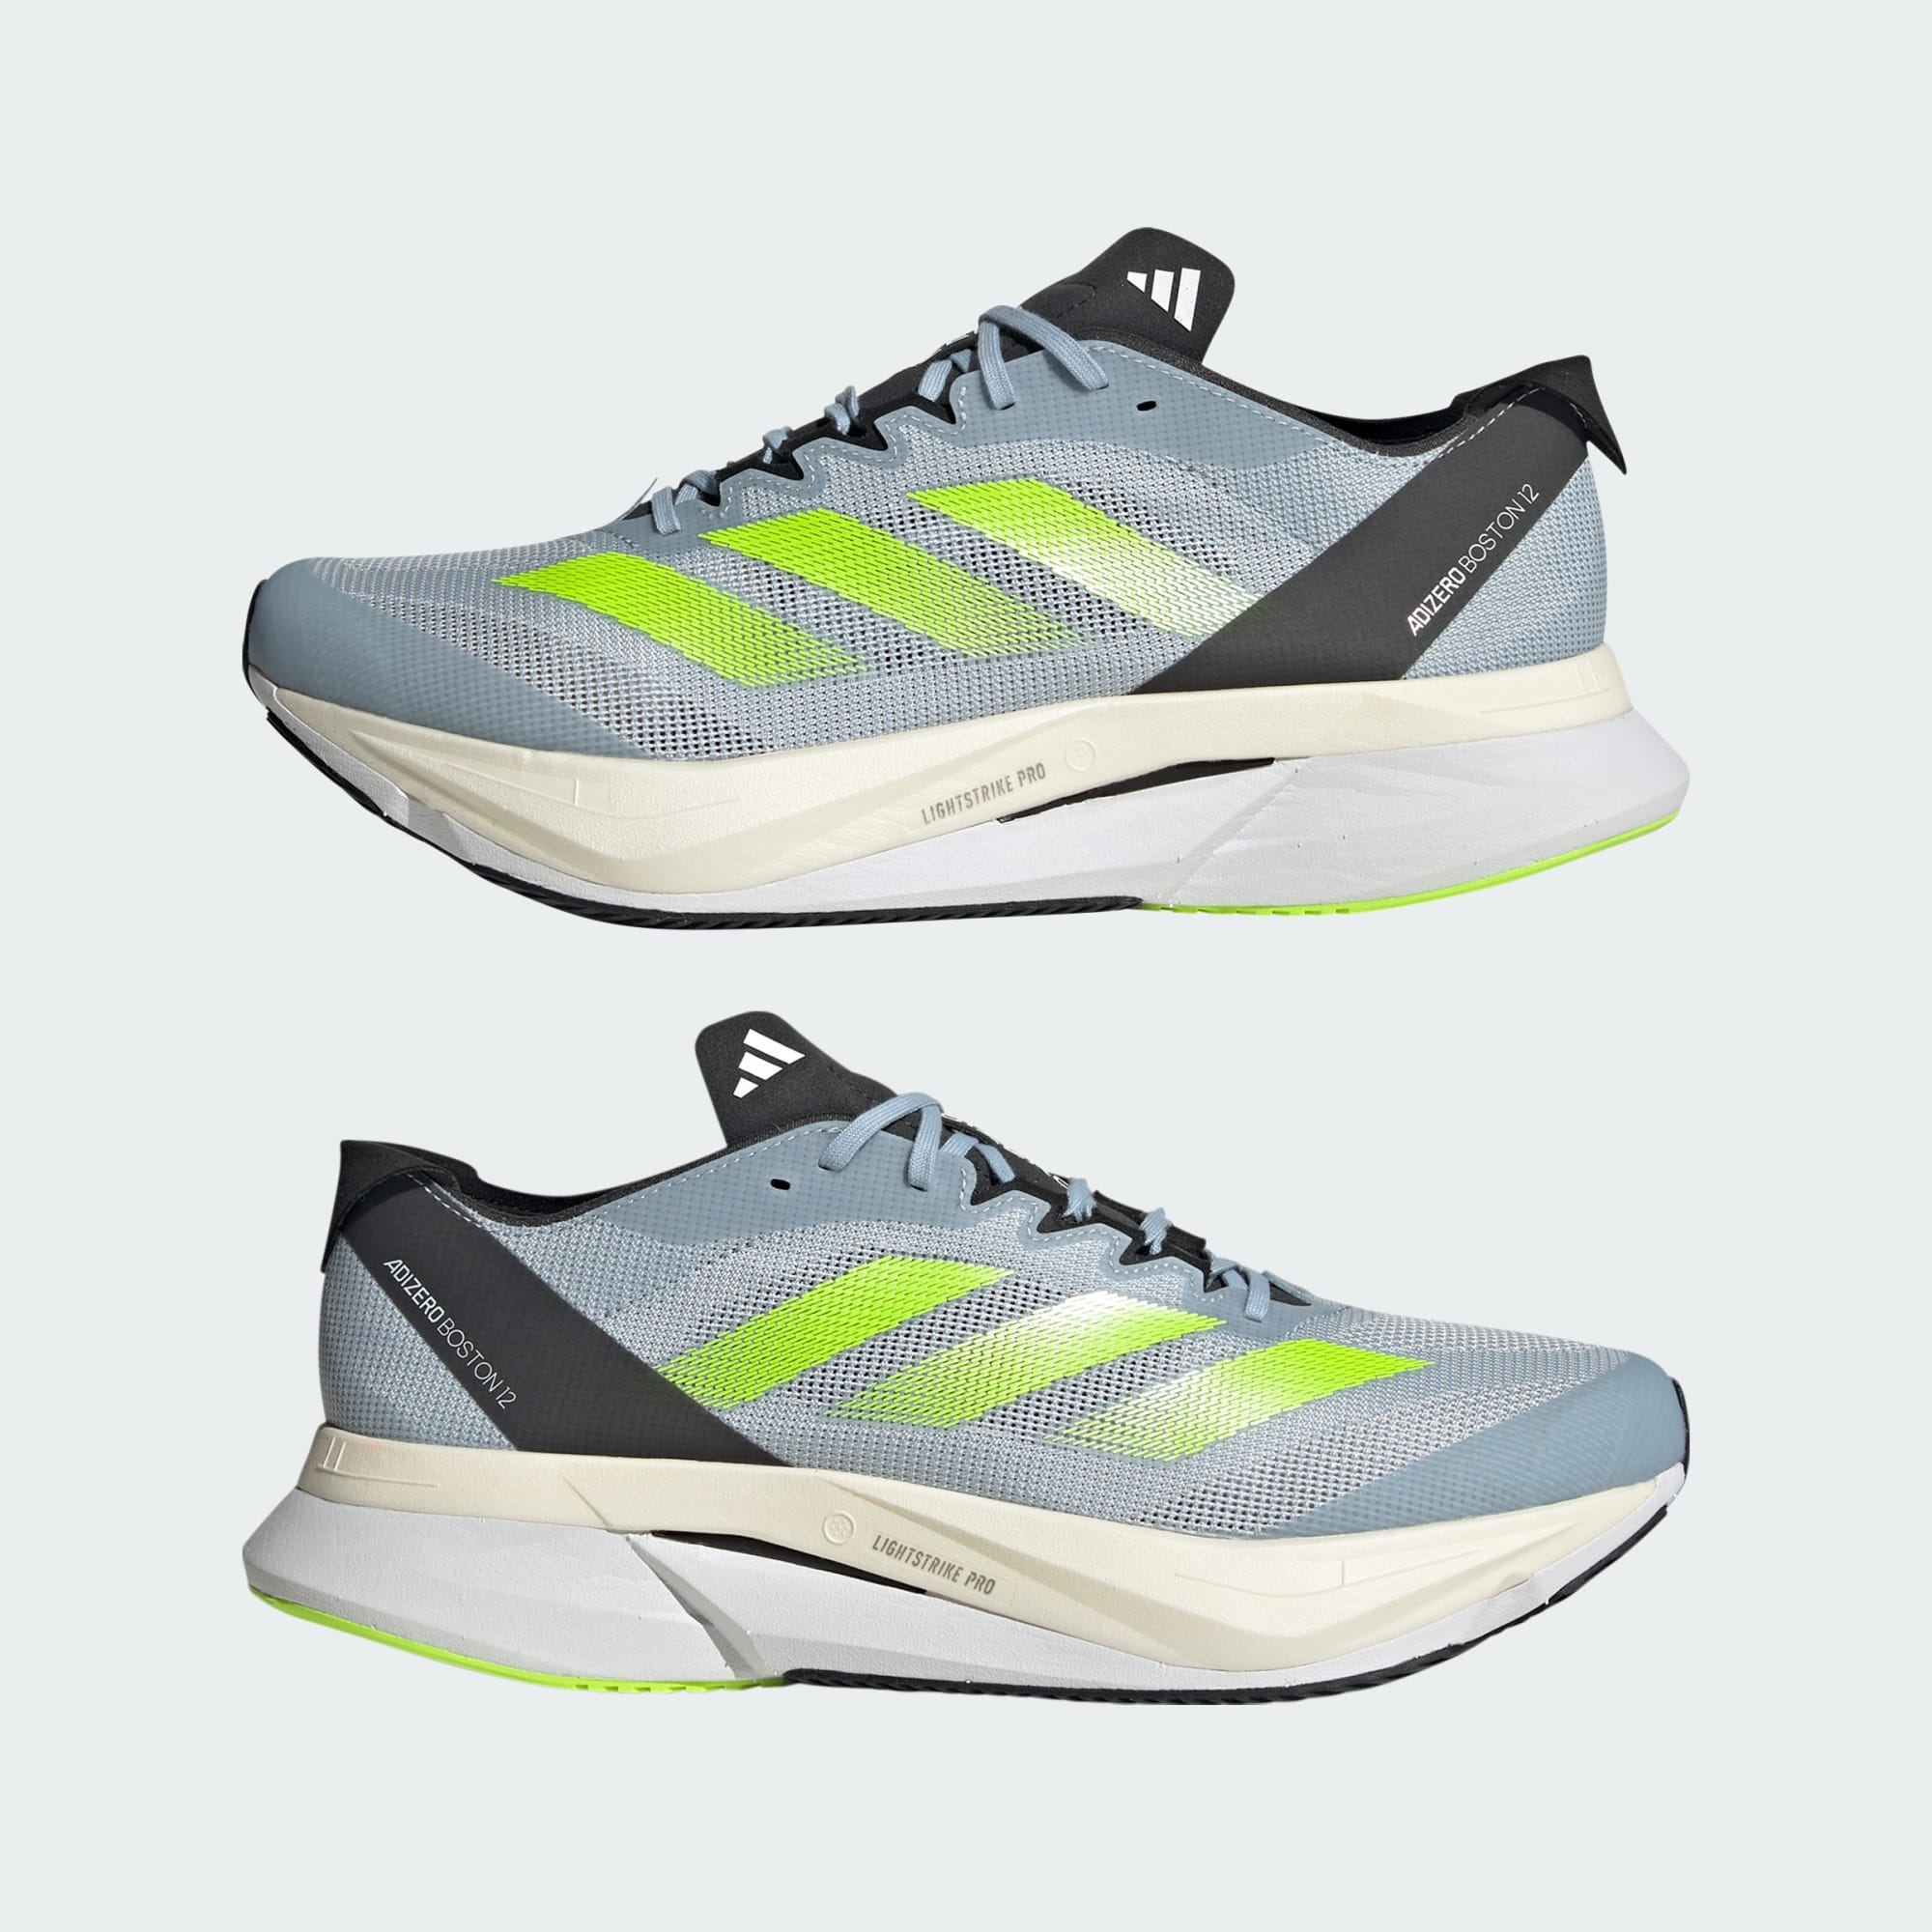 adidas Men's Adizero Boston 12 Running Shoes (Wonder Blue/Lucid Lemon/Carbon) $78.40 + Free Shipping